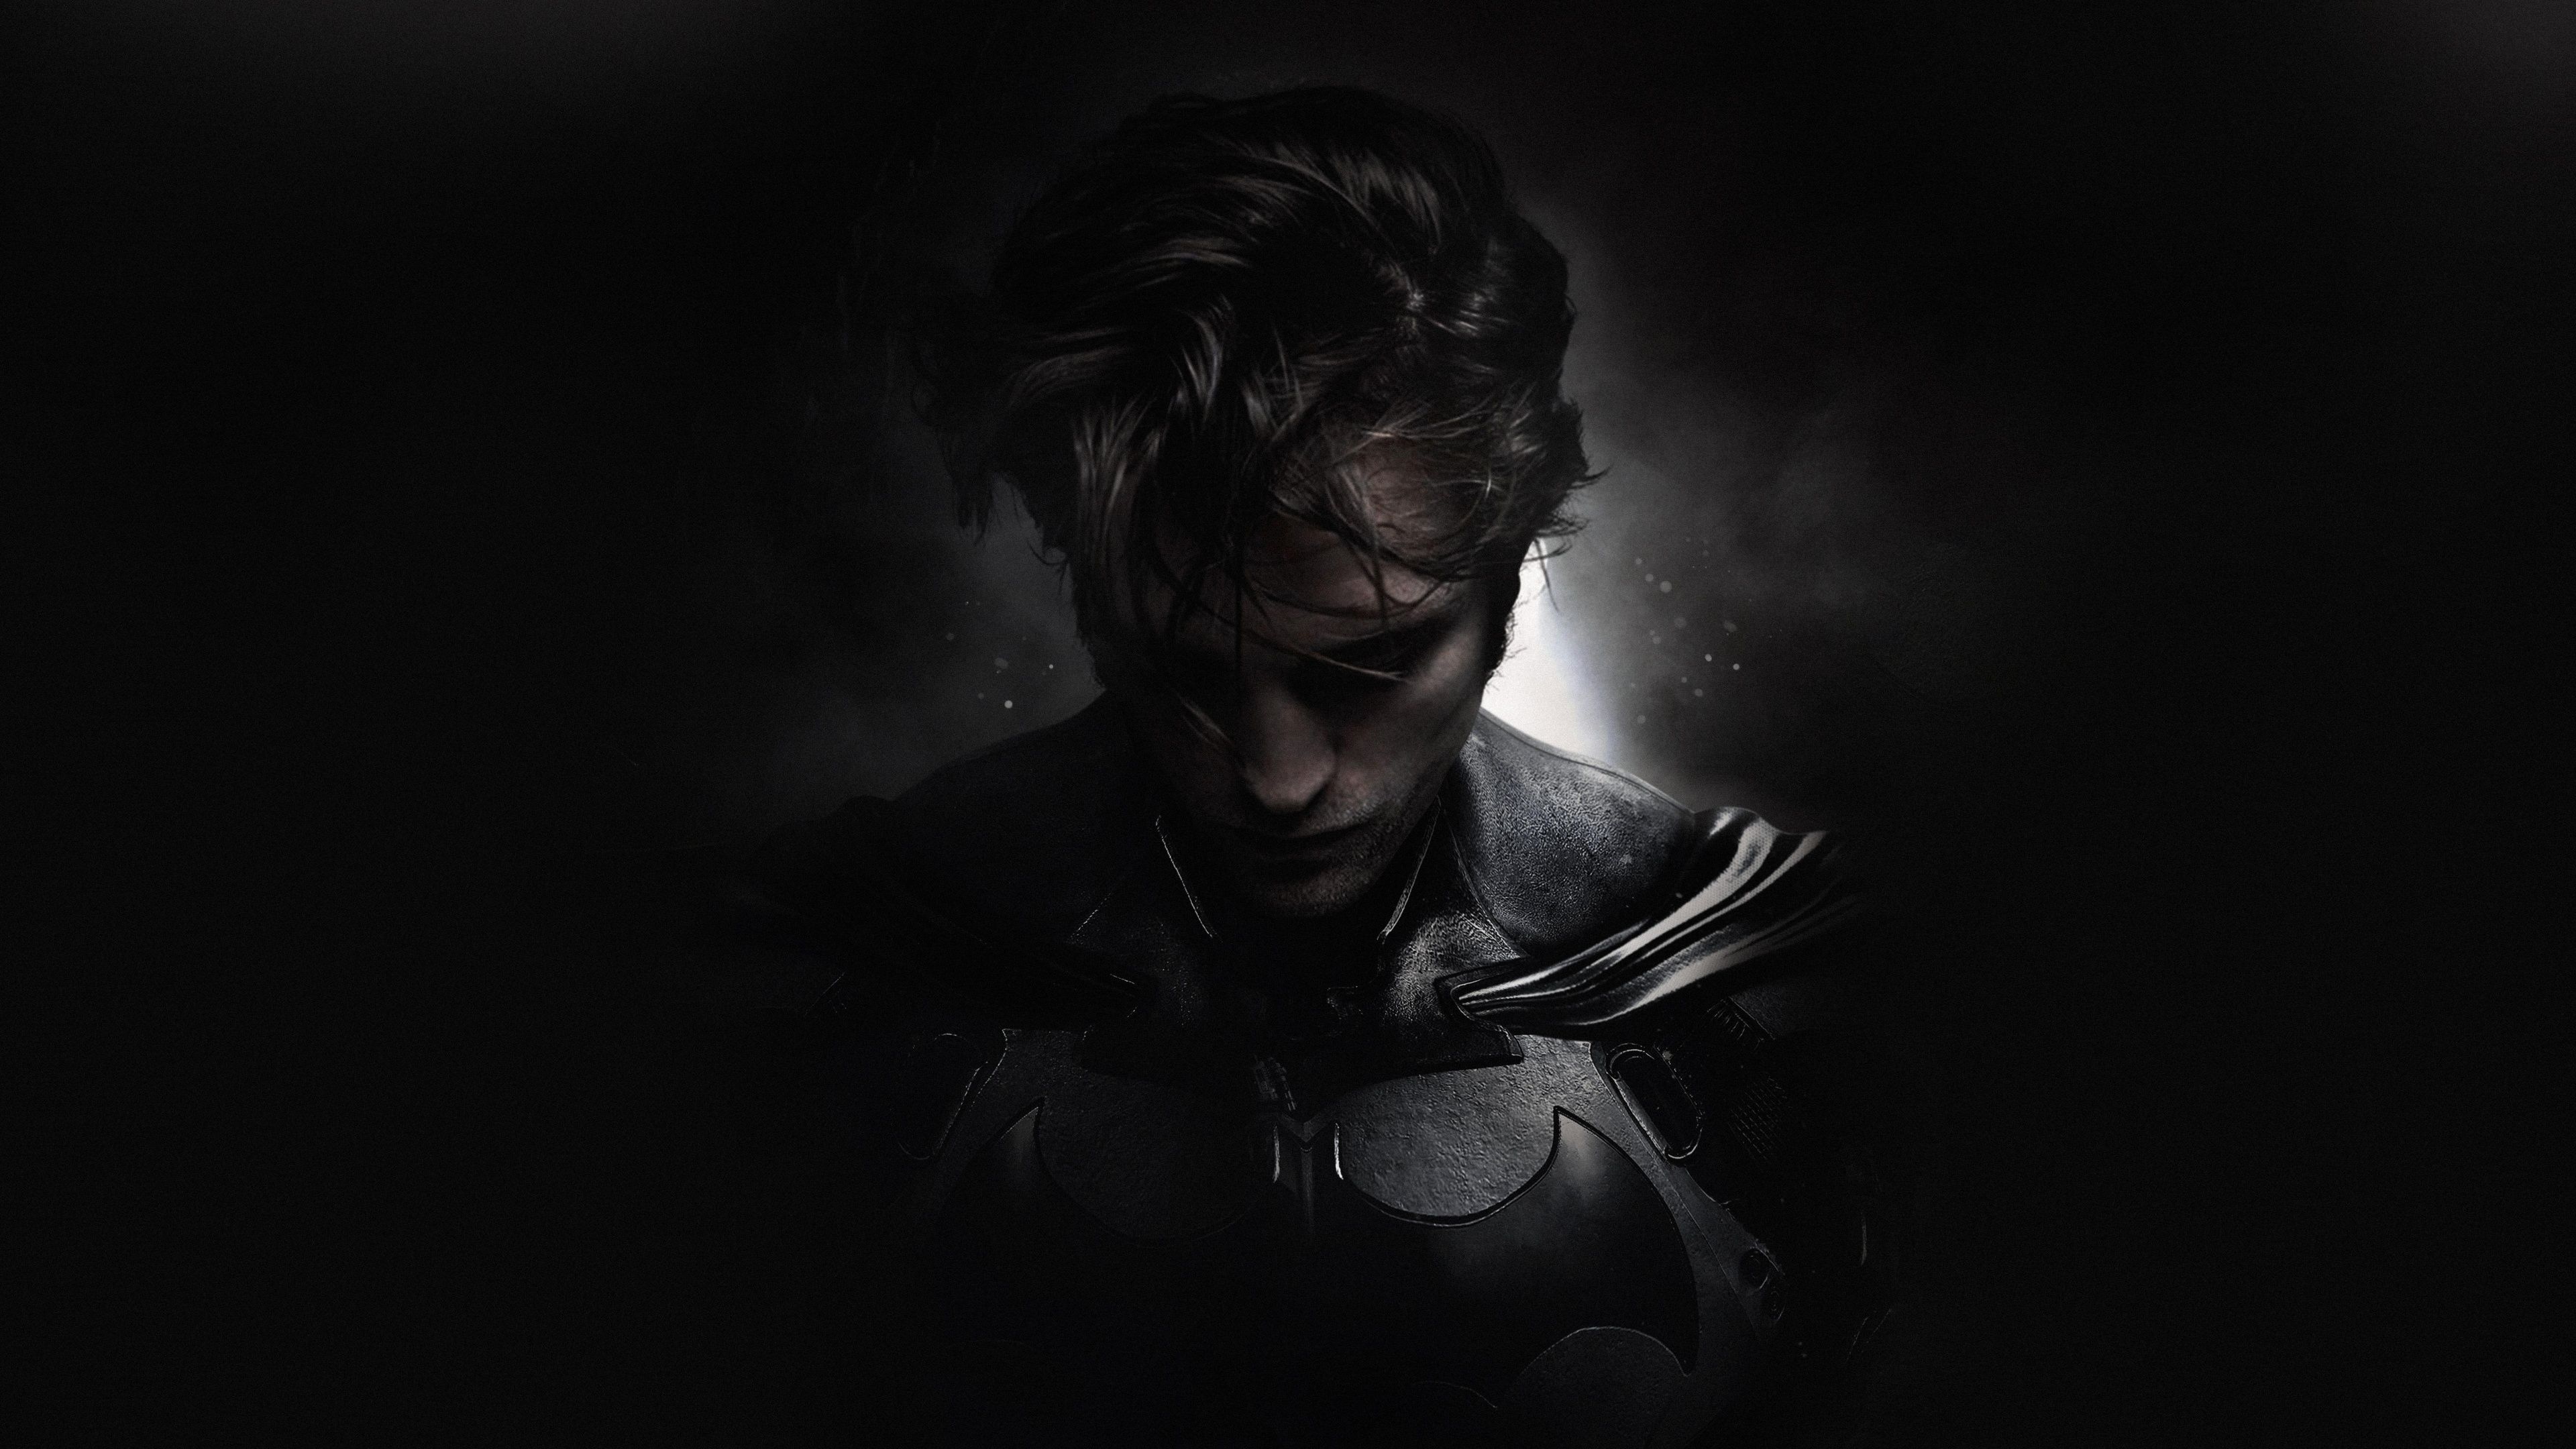 The Batman Robert Pattinson 2021 Poster Wallpaper, HD Movies 4K